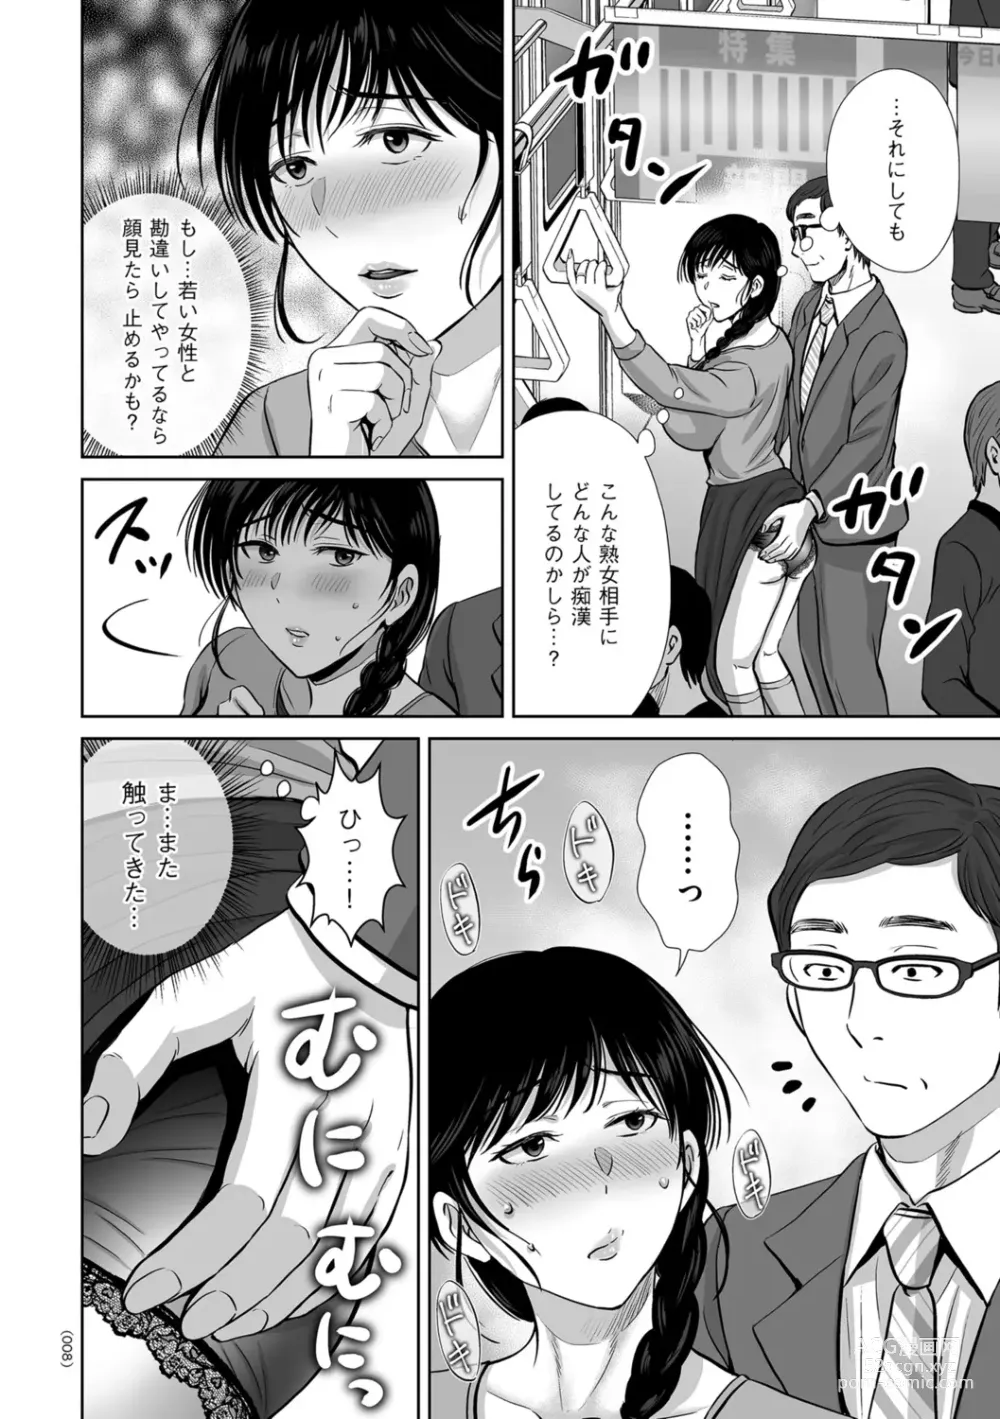 Page 8 of manga Mesuzakari no Haha-tachi e